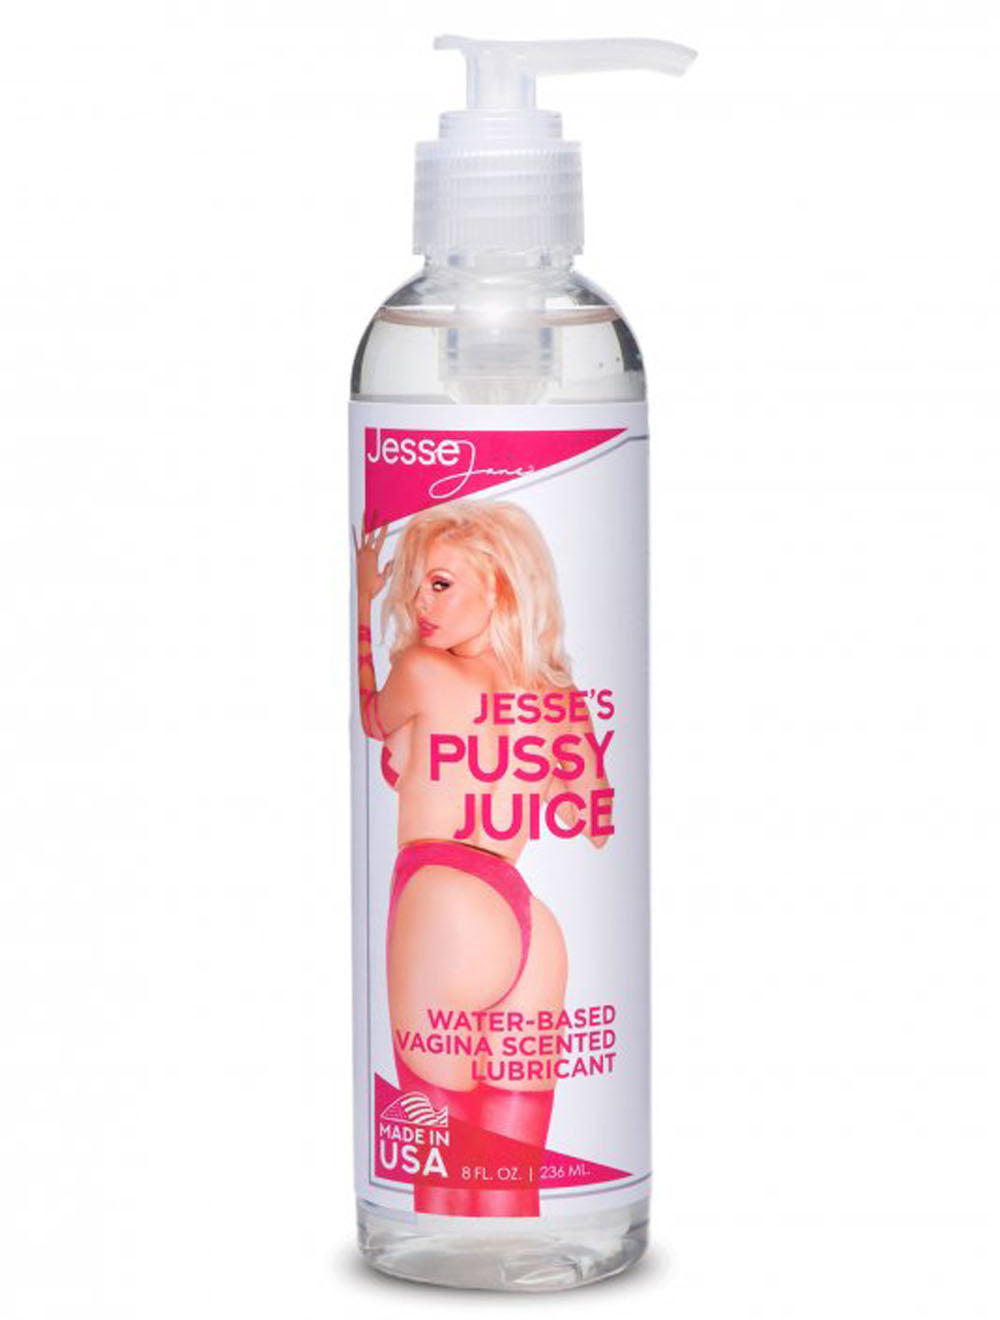 Jesse Jane Pussy Juice Vagina Scented Lube